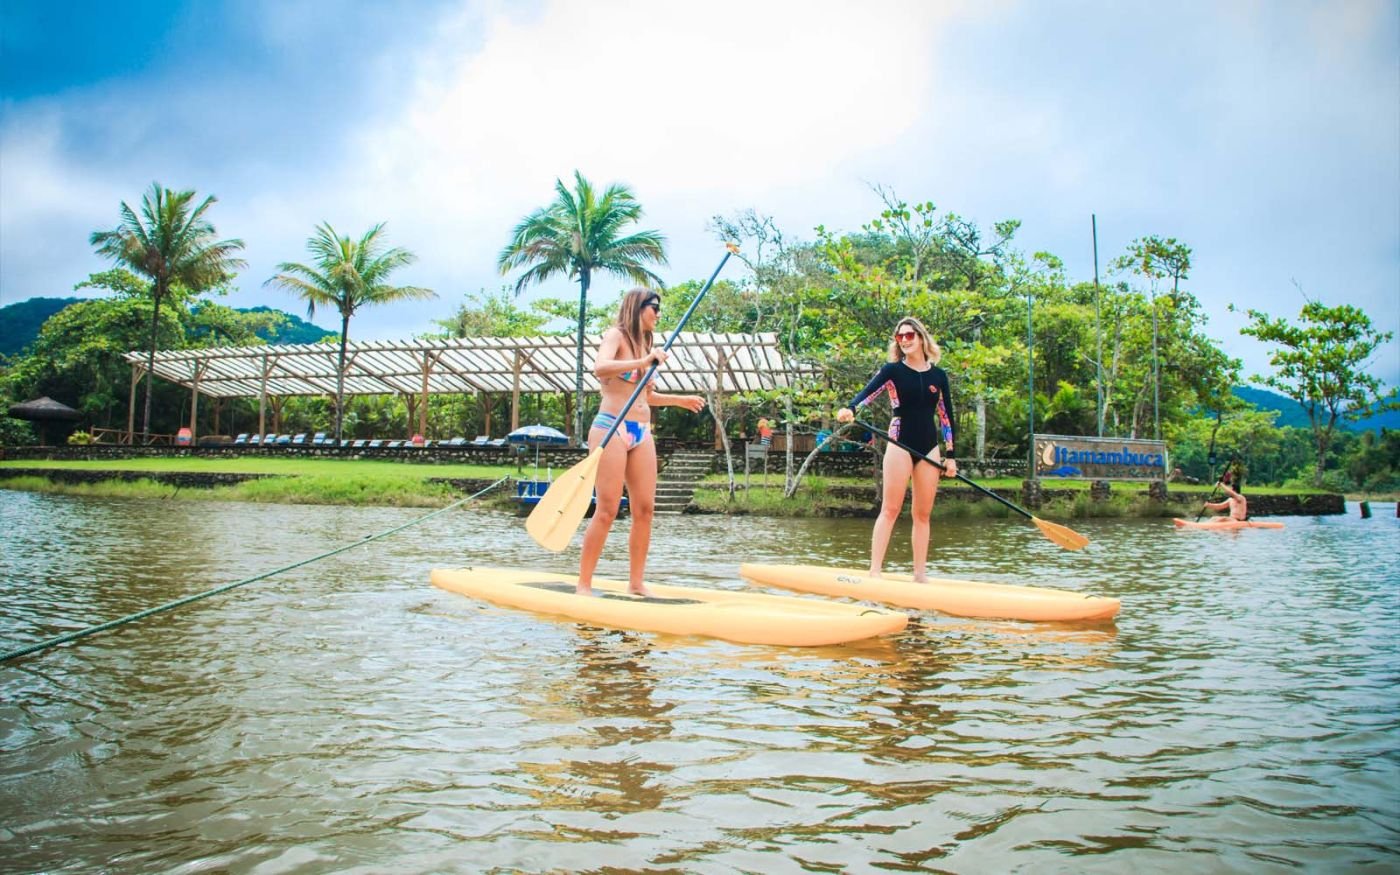 Mulheres praticando Stand Up Paddle no Rio Itamambuca